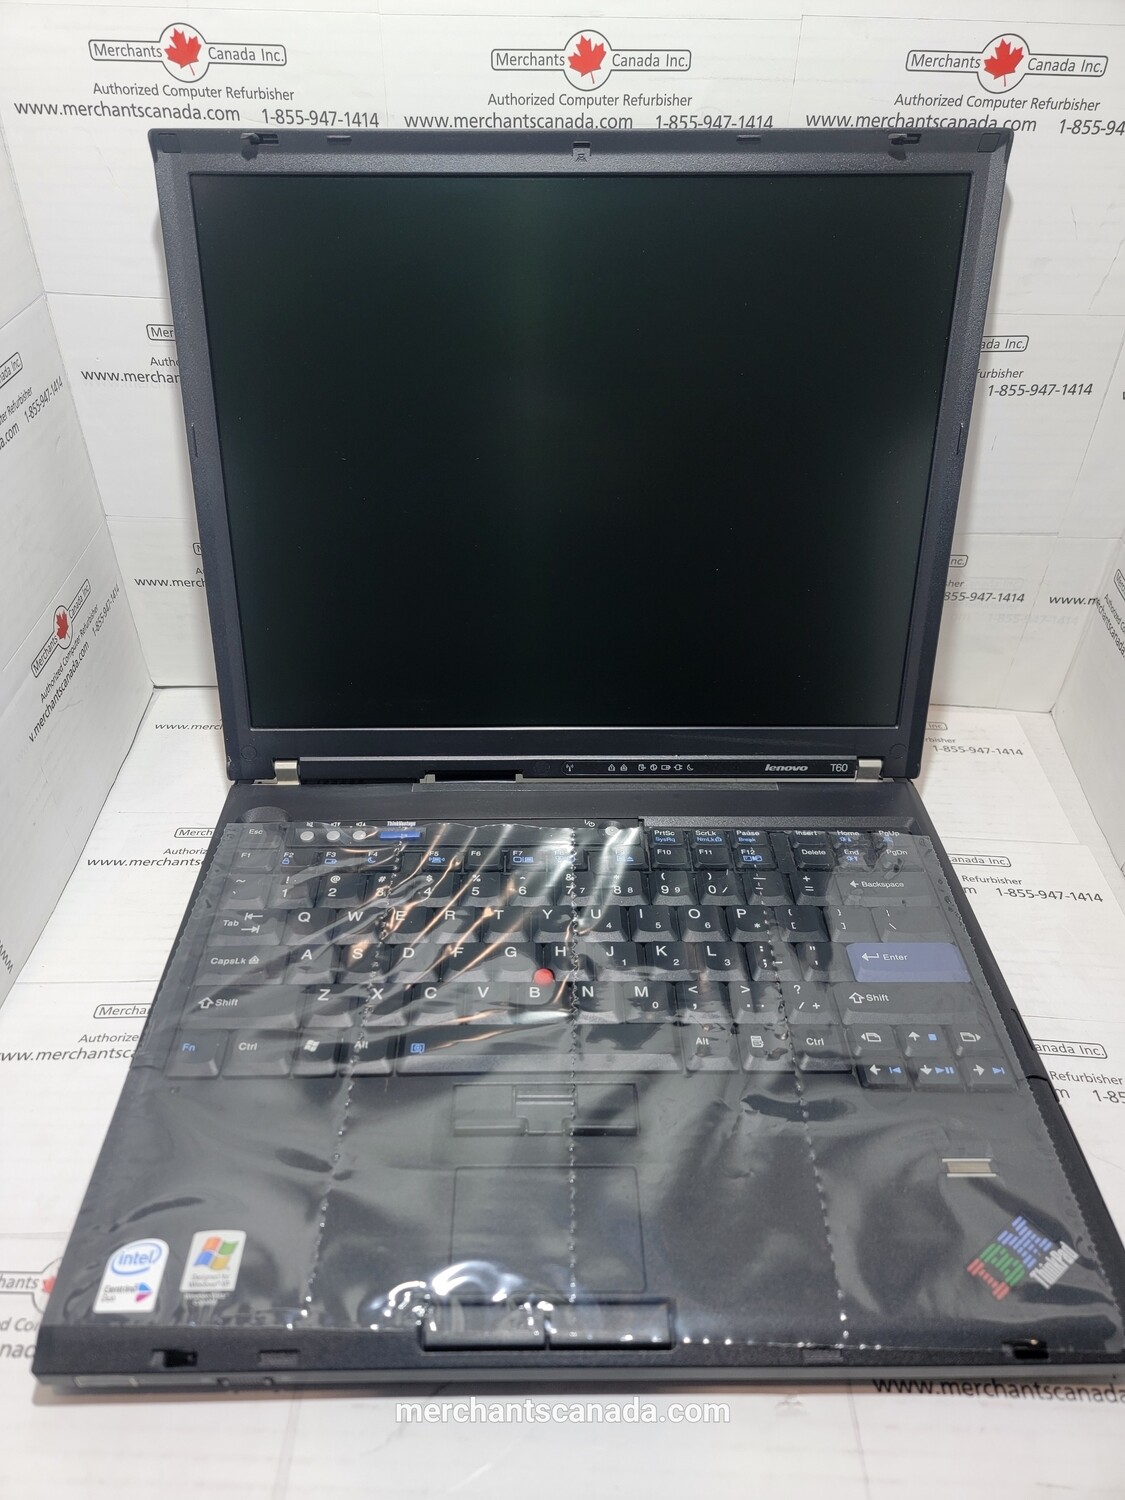 Lenovo ThinkPad T60 Intel T2300 1.66 GHz | 1GB | 40GB | DVD+ | 14" | RJ-45 LAN | WIFI | Windows XP Pro | 1951-28U | 195228U